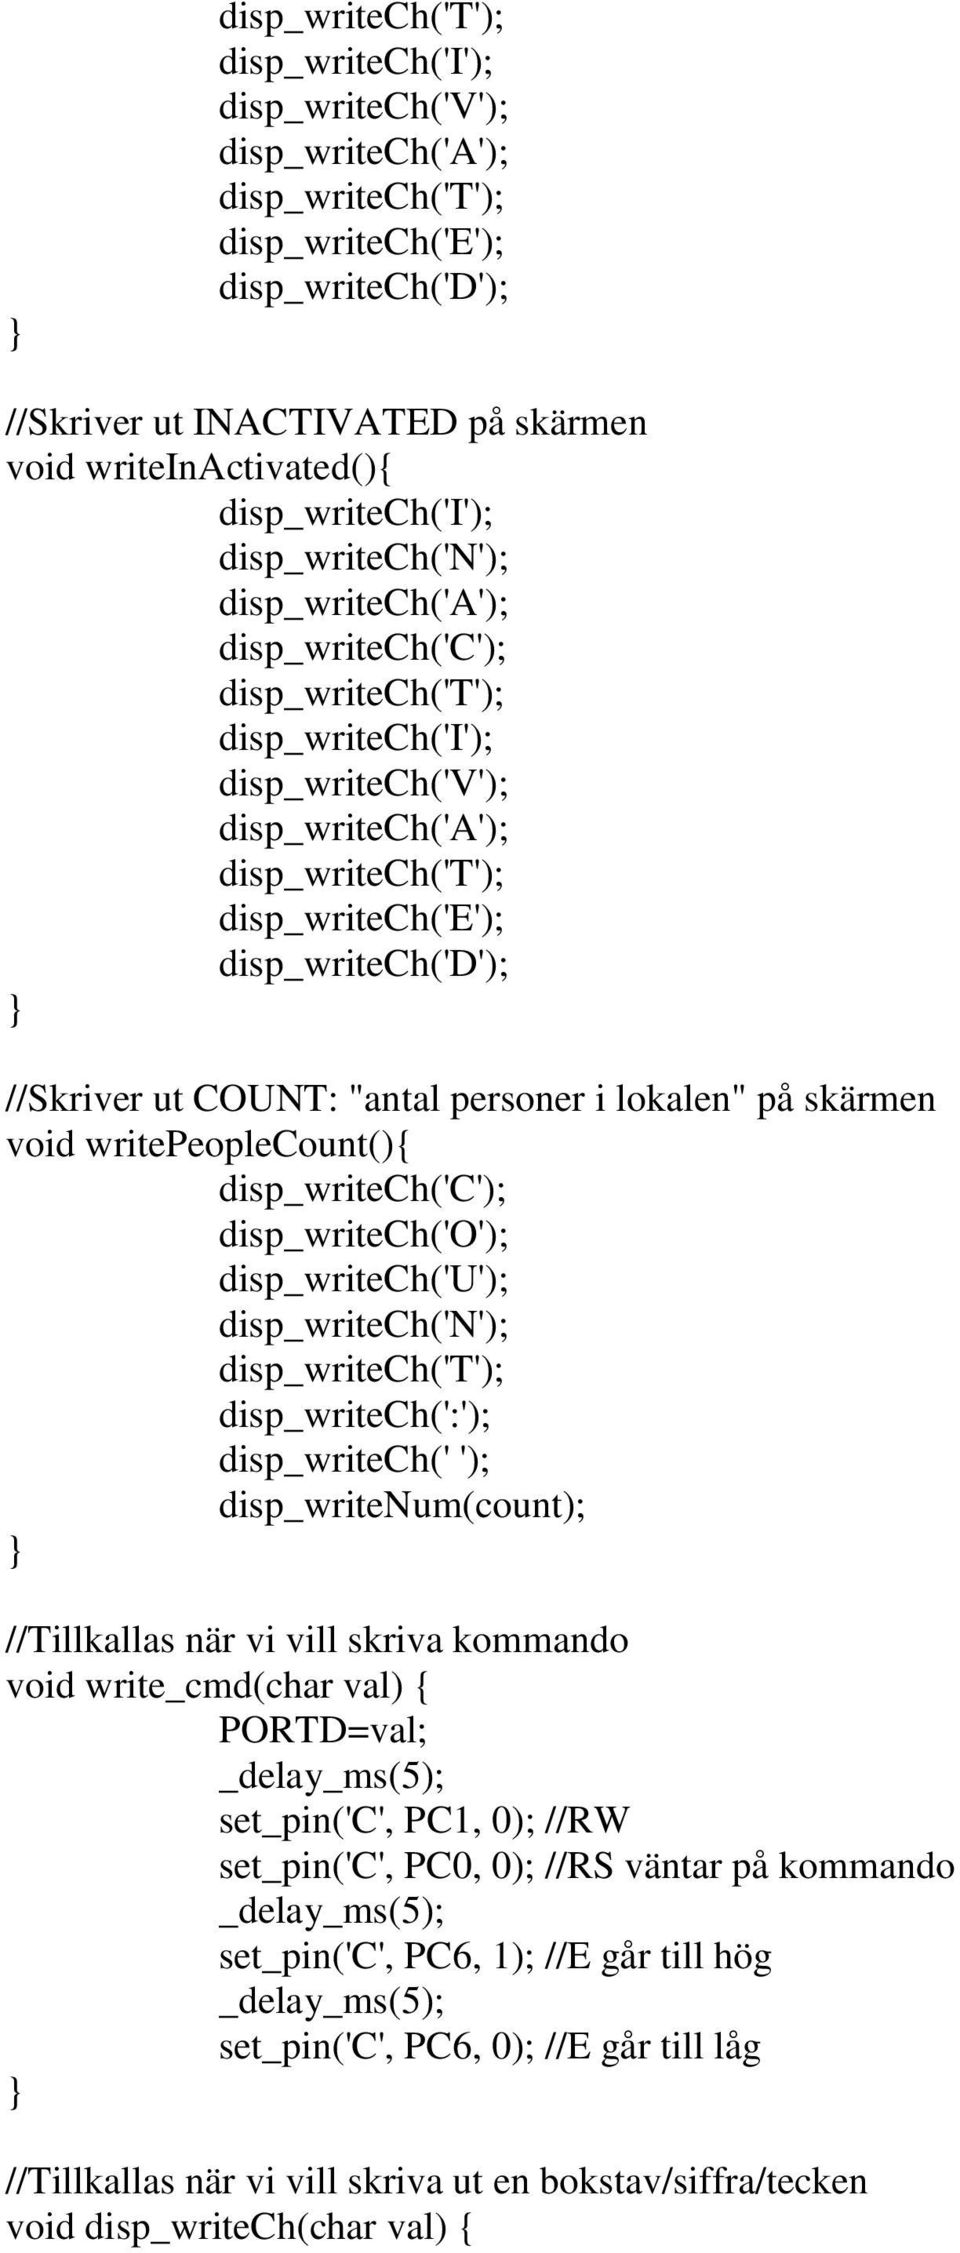 disp_writech('d'); //Skriver ut COUNT: "antal personer i lokalen" på skärmen void writepeoplecount(){ disp_writech('c'); disp_writech('o'); disp_writech('u'); disp_writech('n'); disp_writech('t');